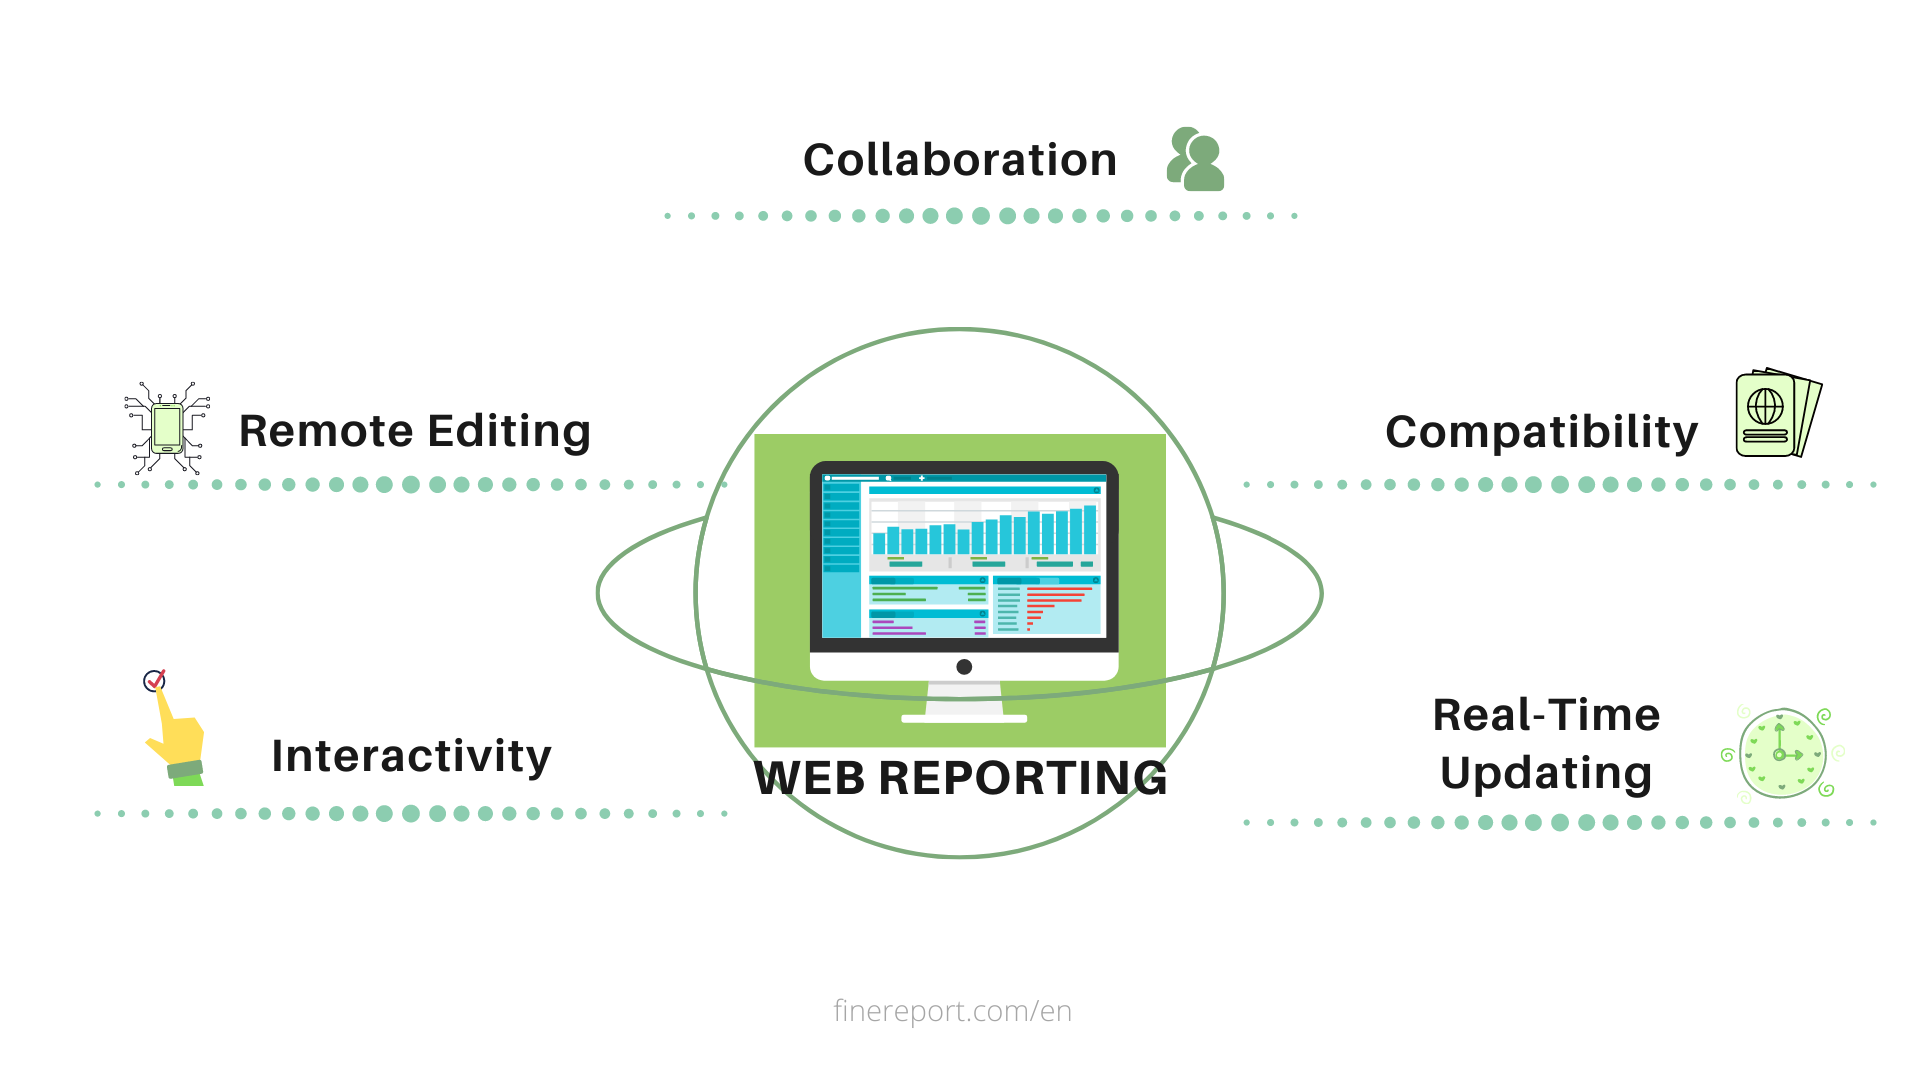 System net webexception